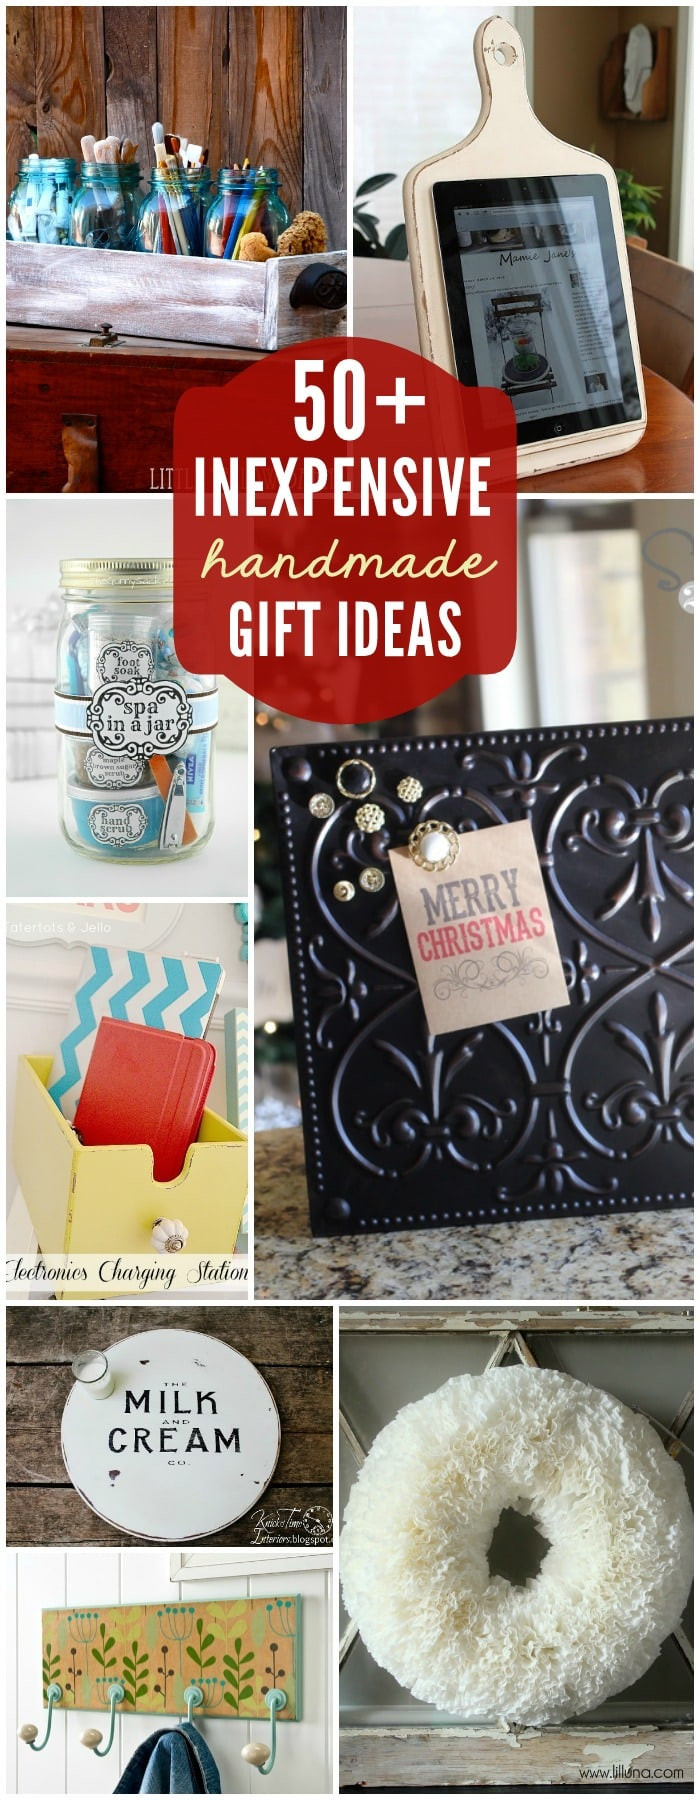 Good Holiday Gift Ideas
 75 Gift Ideas under $5